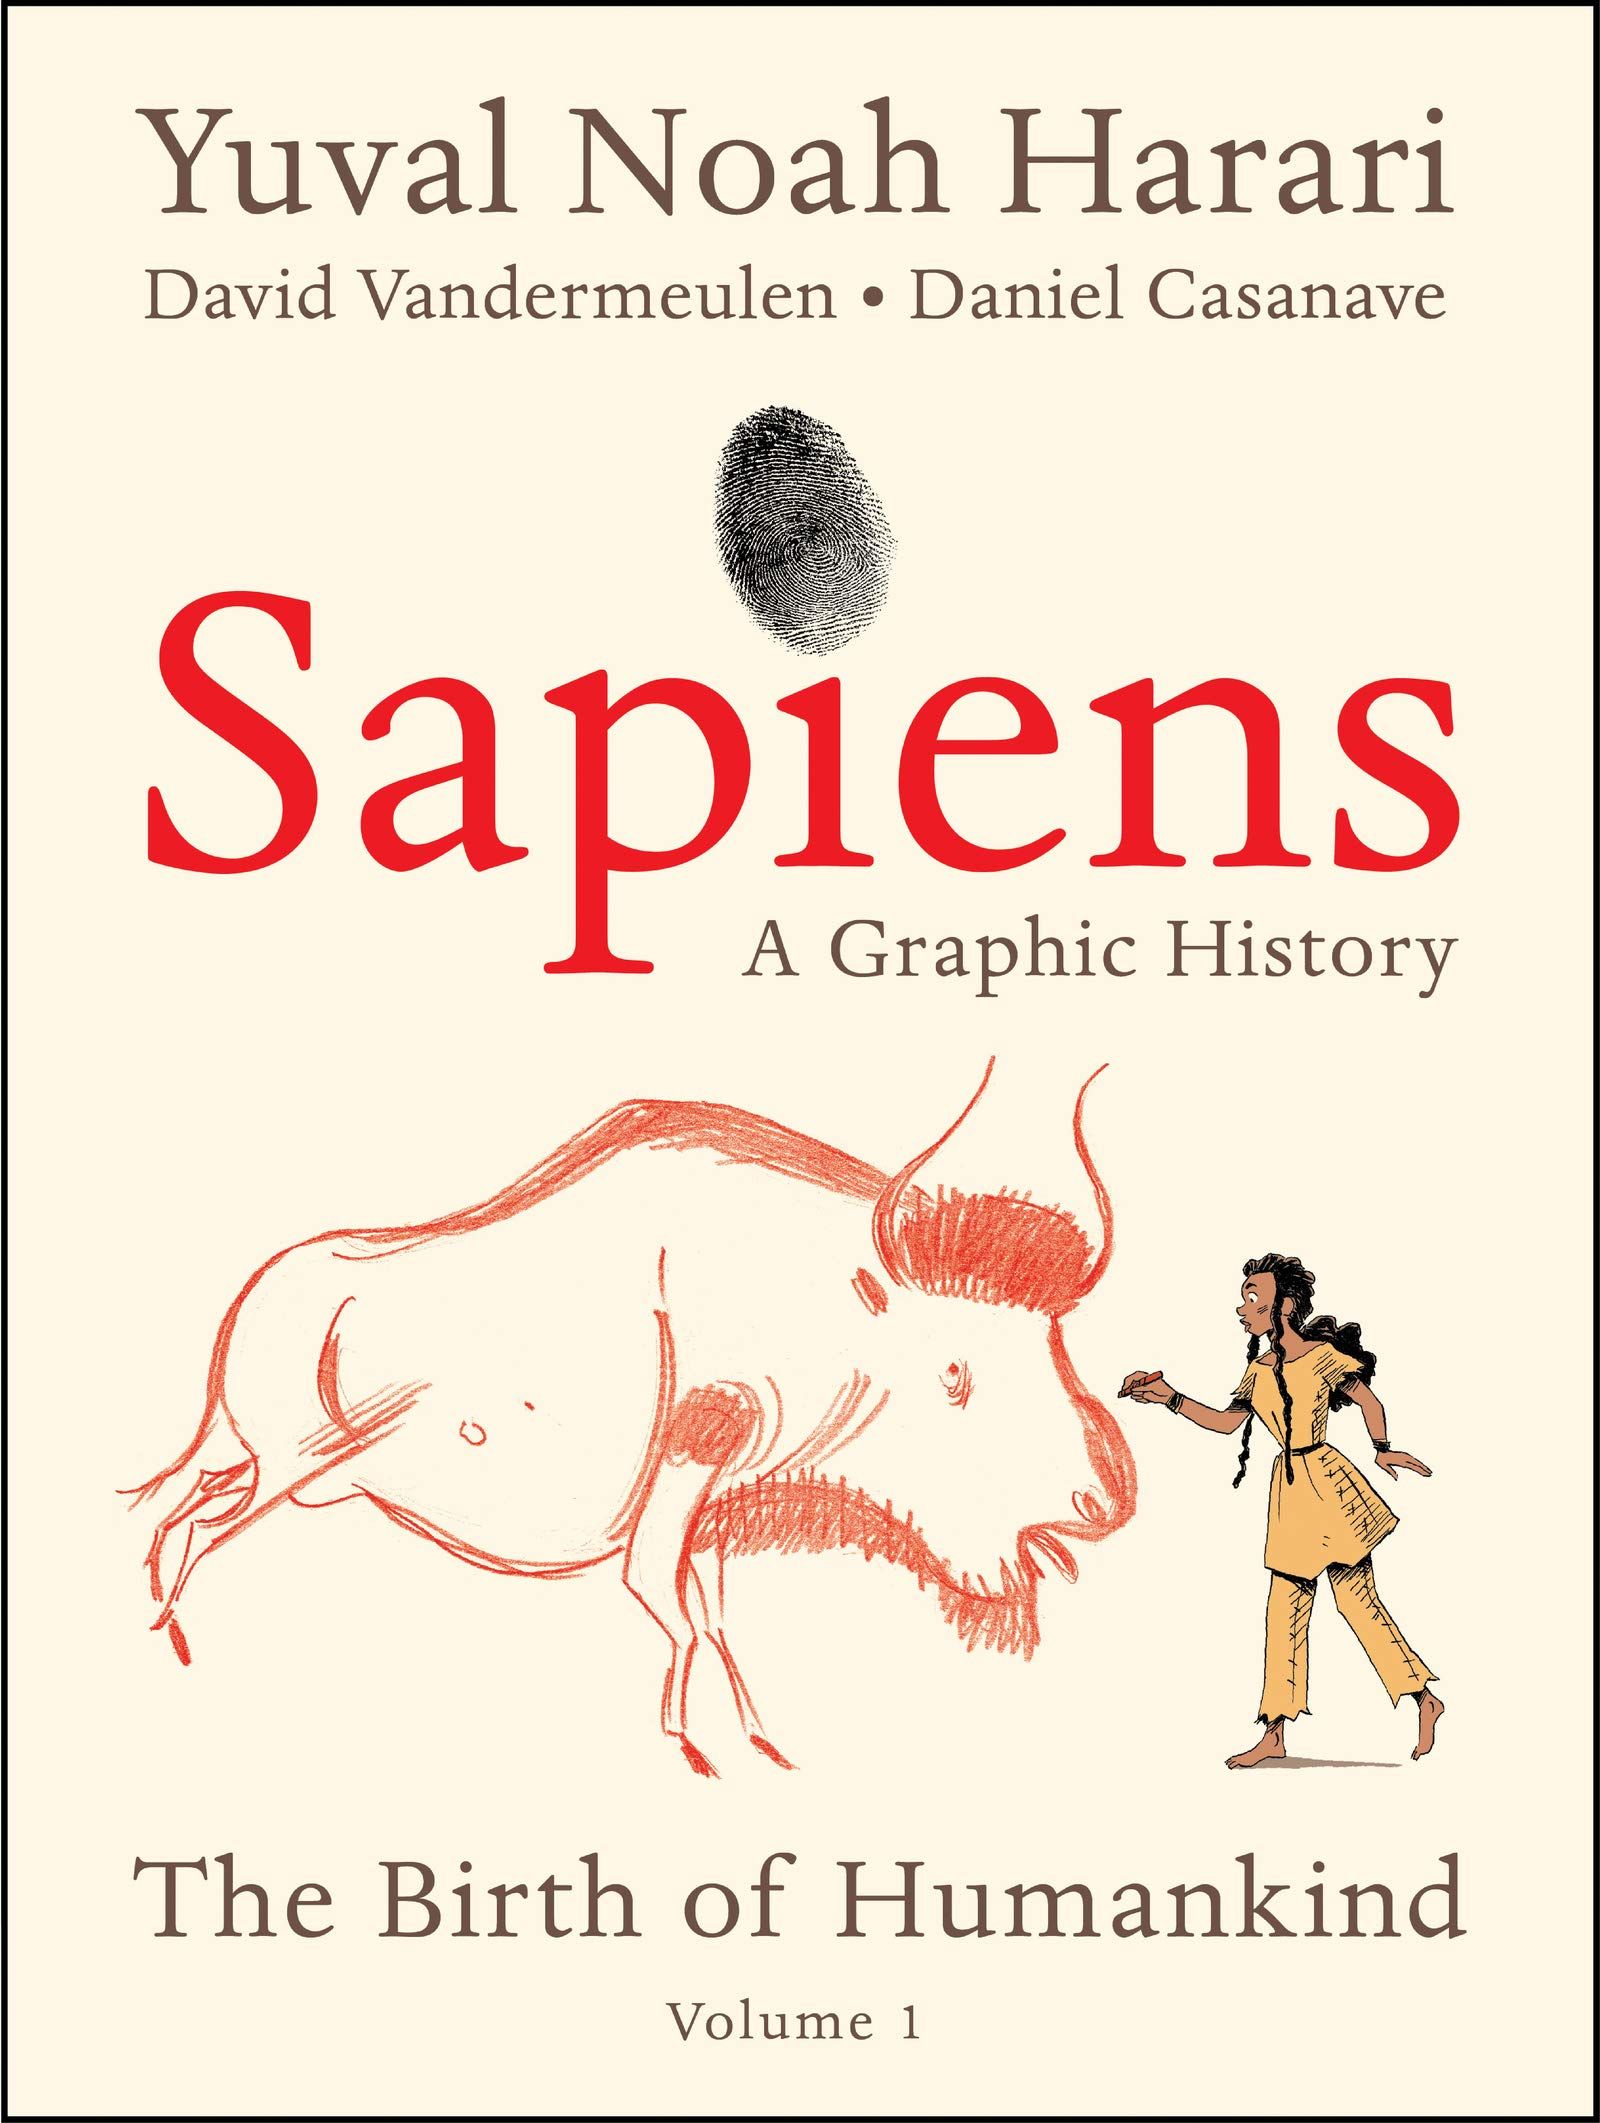 'Sapiens - A Graphic History (Volume 1)' by Yuval Noah Harari